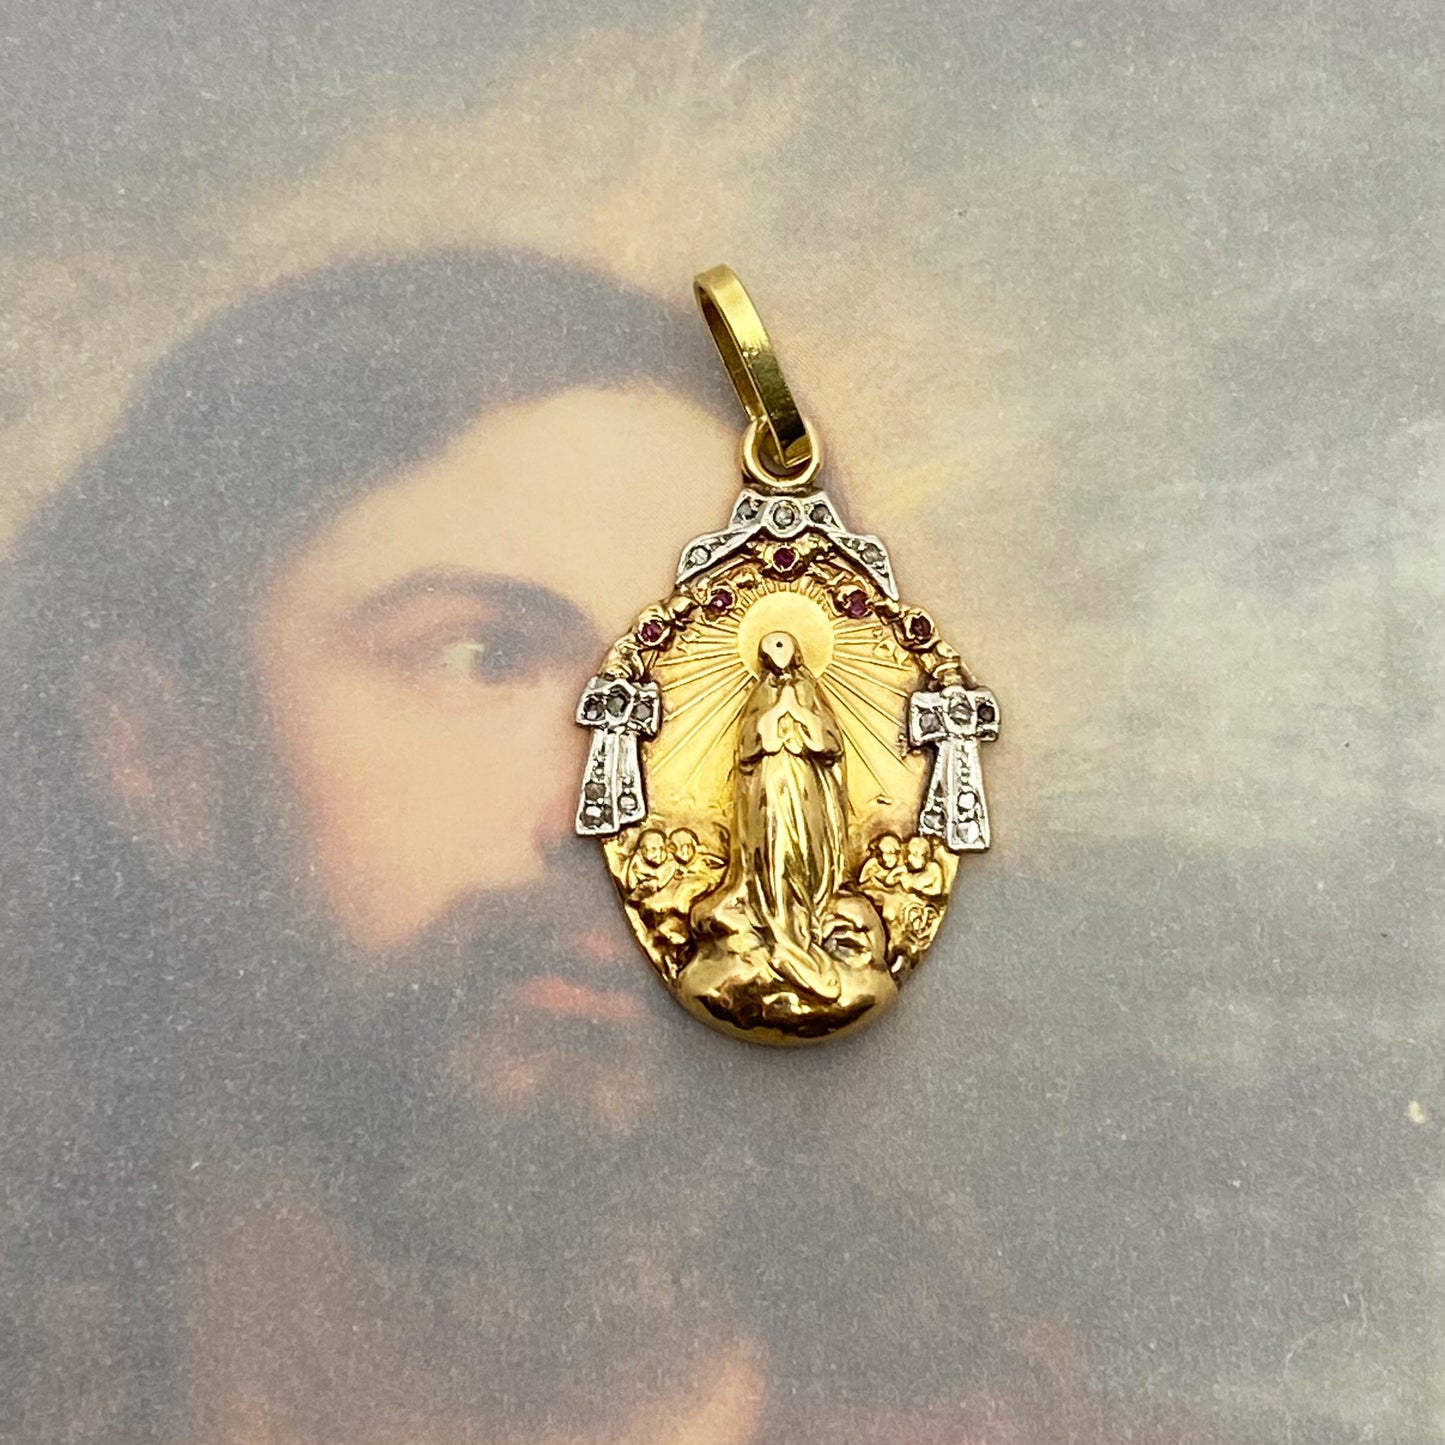 Antique 18k Gold Religious Medal, Art Nouveau, Our Lady Medal Pendant, 18 ct Gold, Portuguese Religious Medal, Catholic, Christian